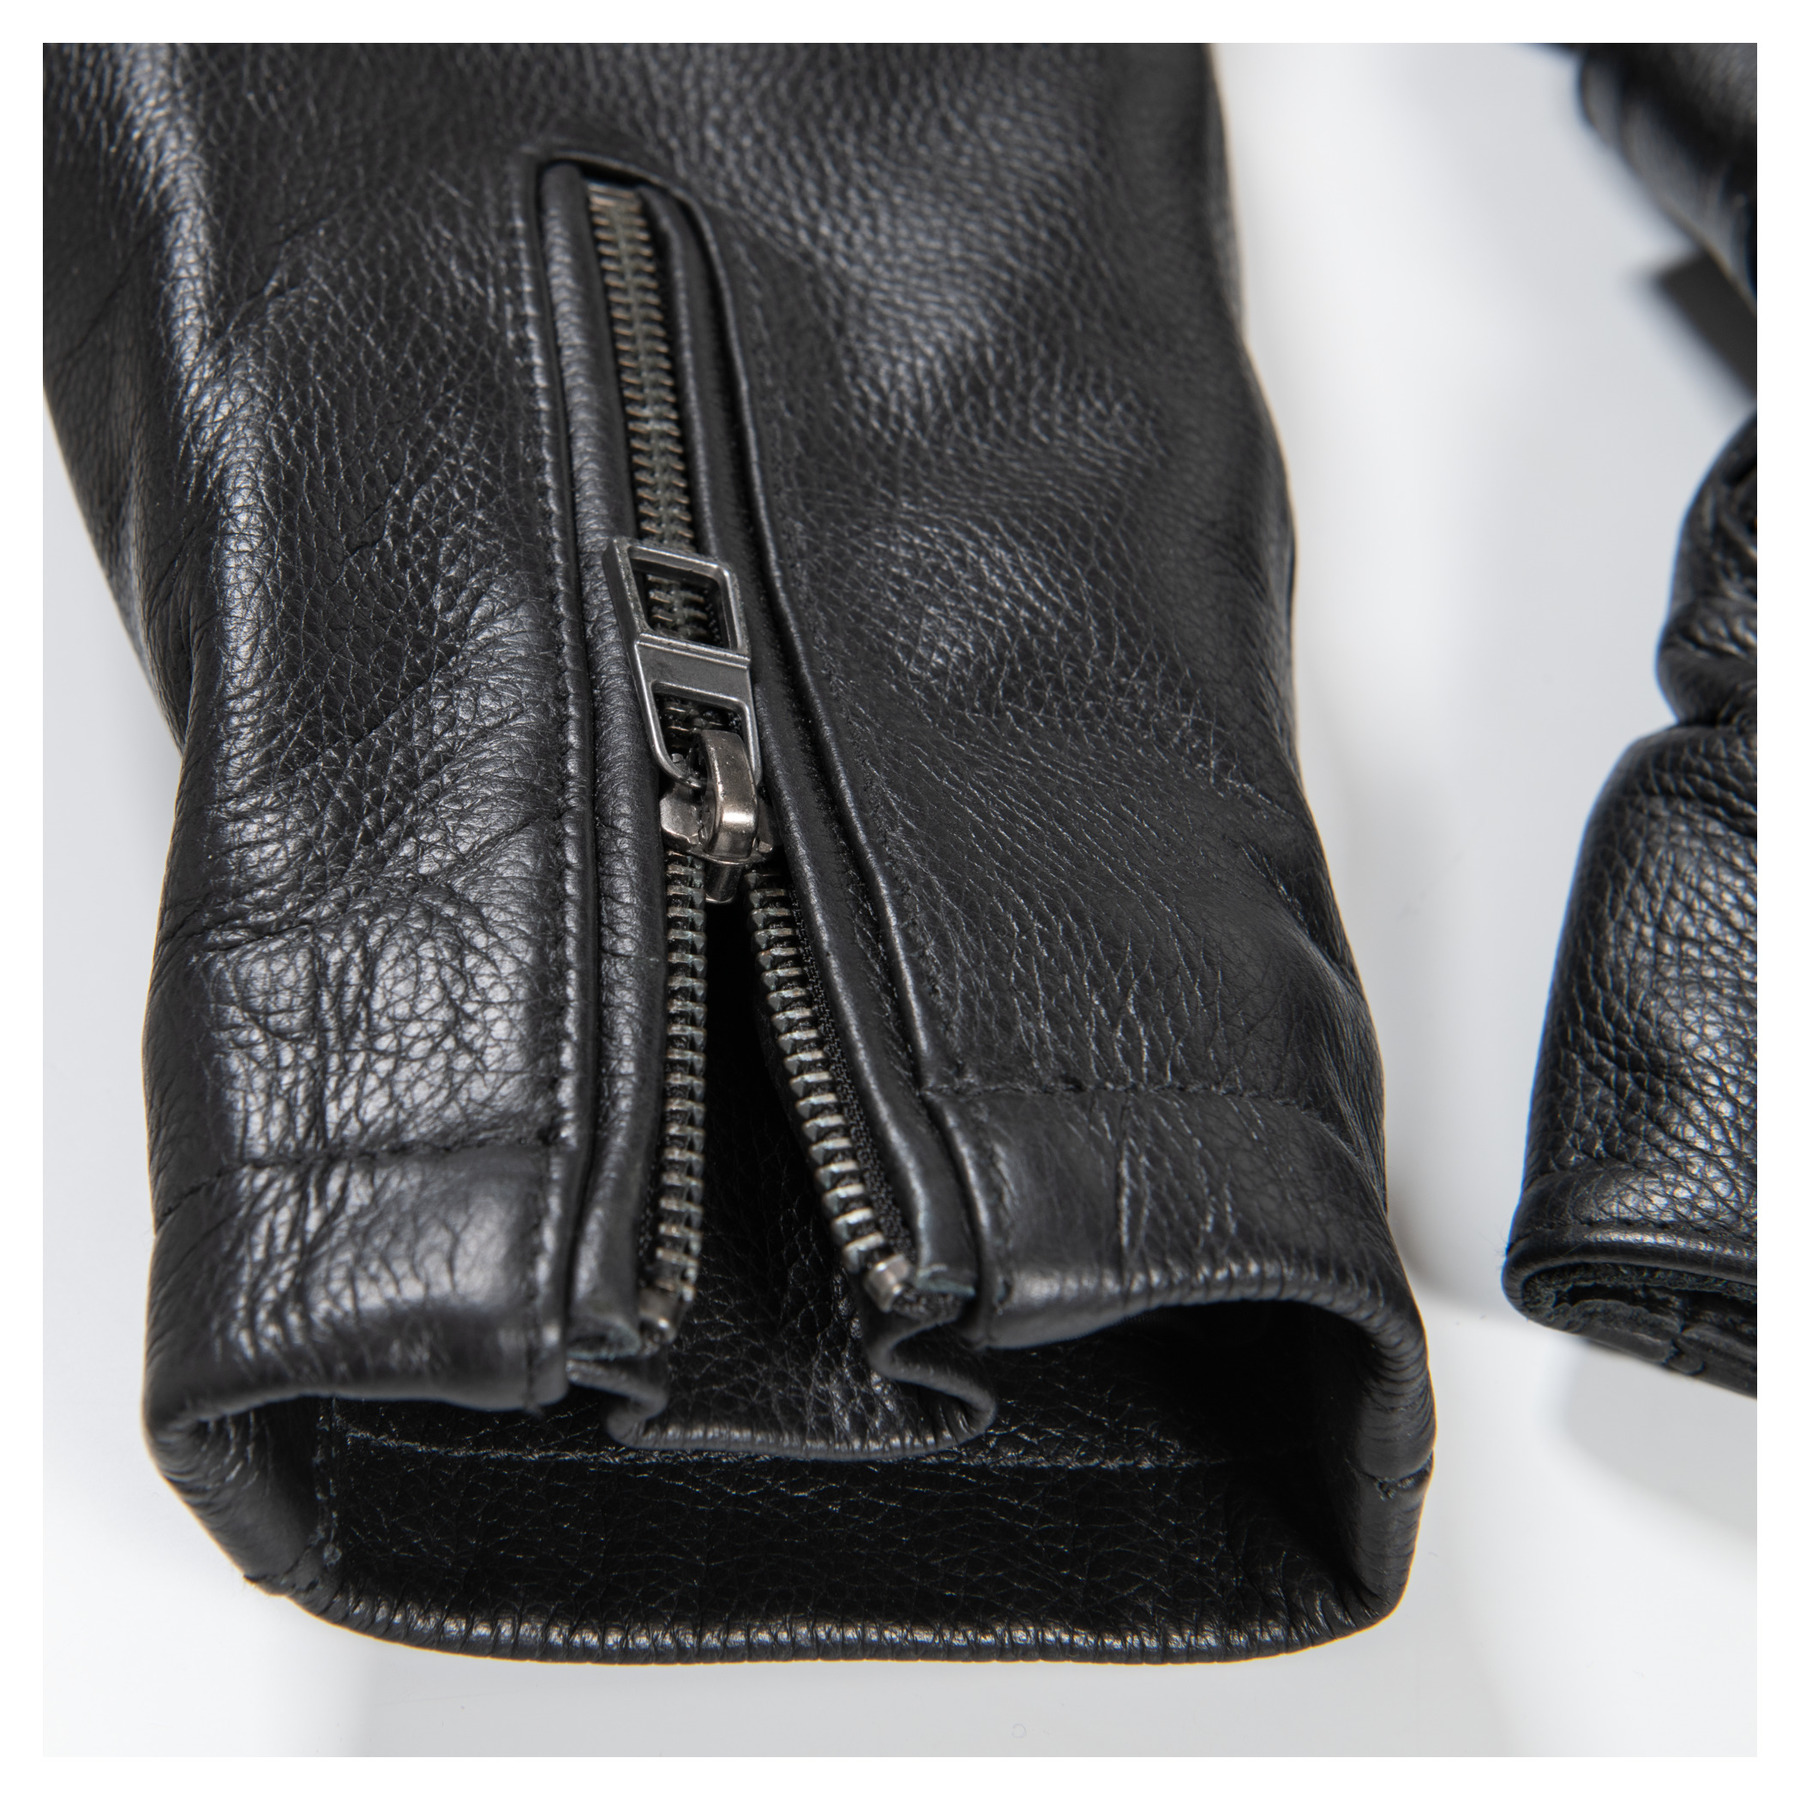 Detlev Louis Presents The Stylish DL-JM-12 Leather Jacket